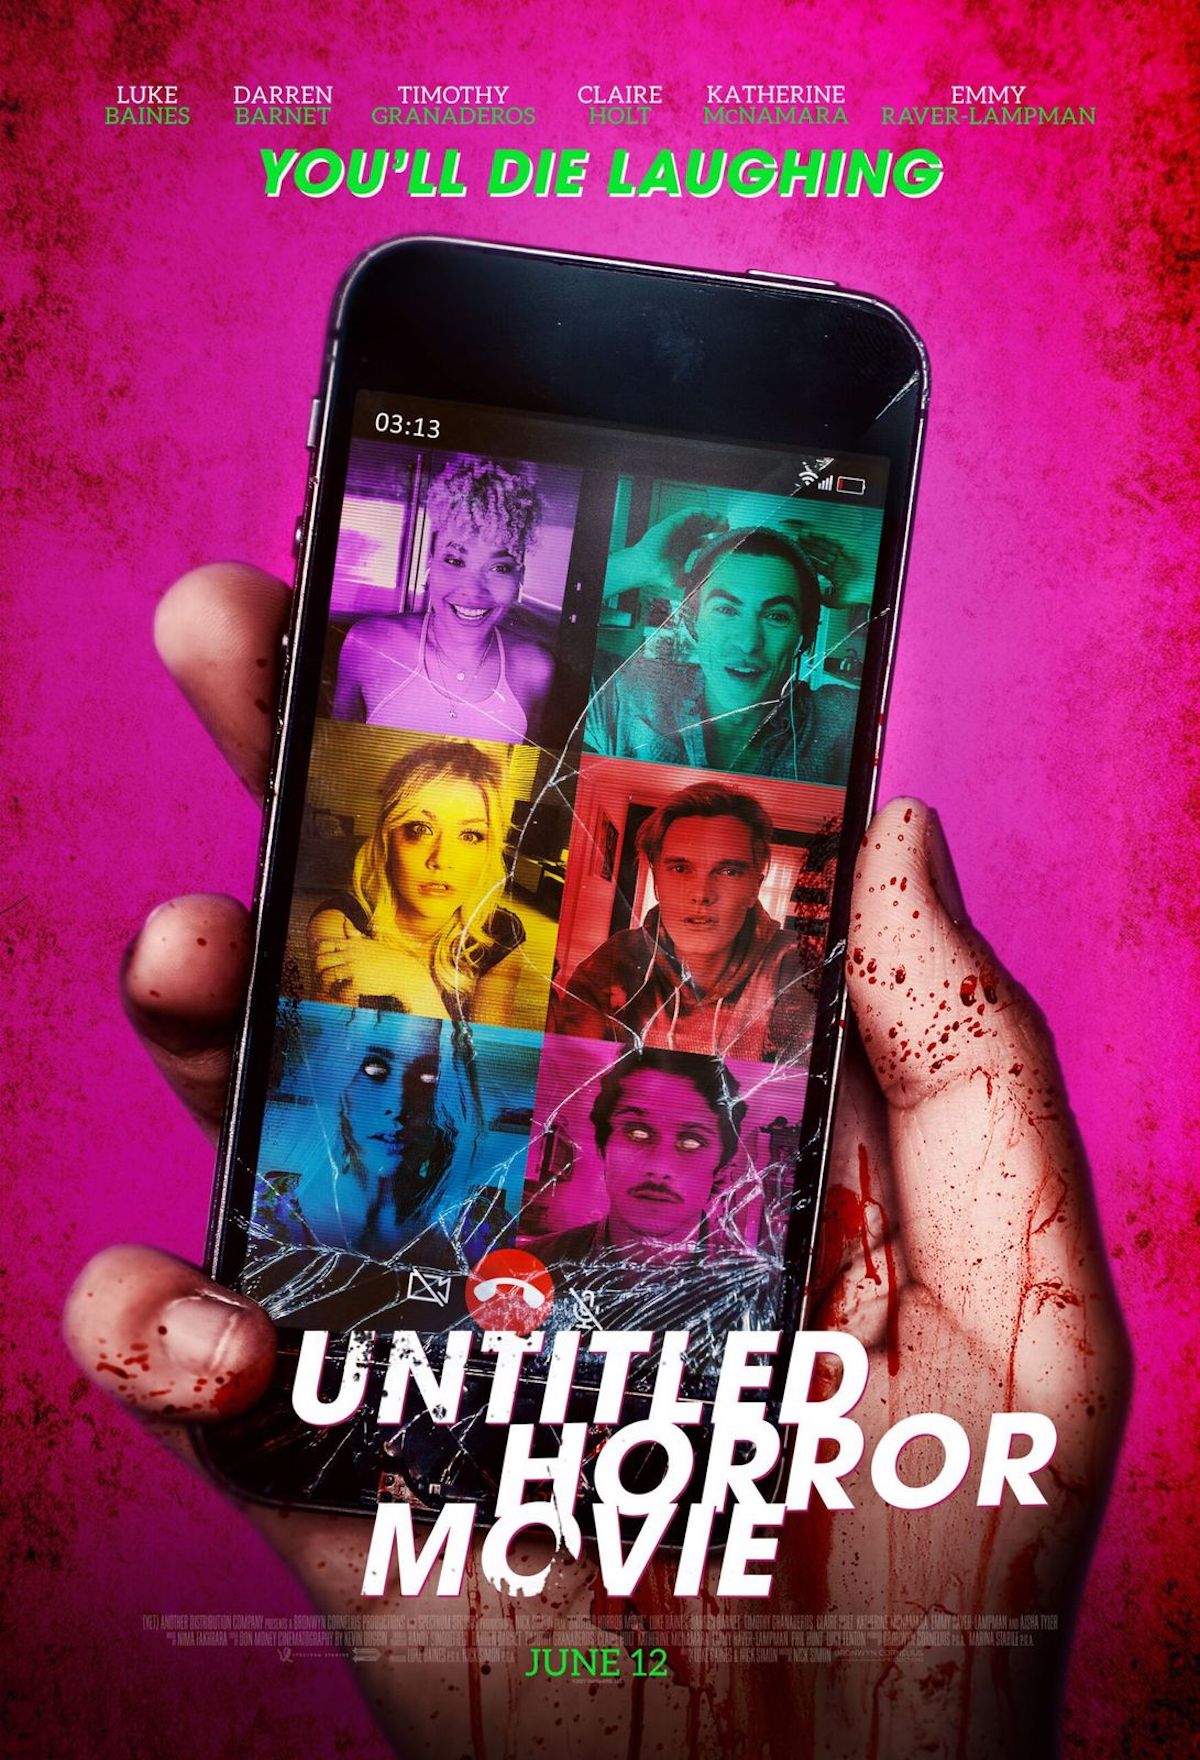 'Untitled Horror Movie' poster featuring Emmy Raver-Lampman, Darren Barnet, Claire Holt, Luke Baines, Katherine McNamara, and Tim Granaderos